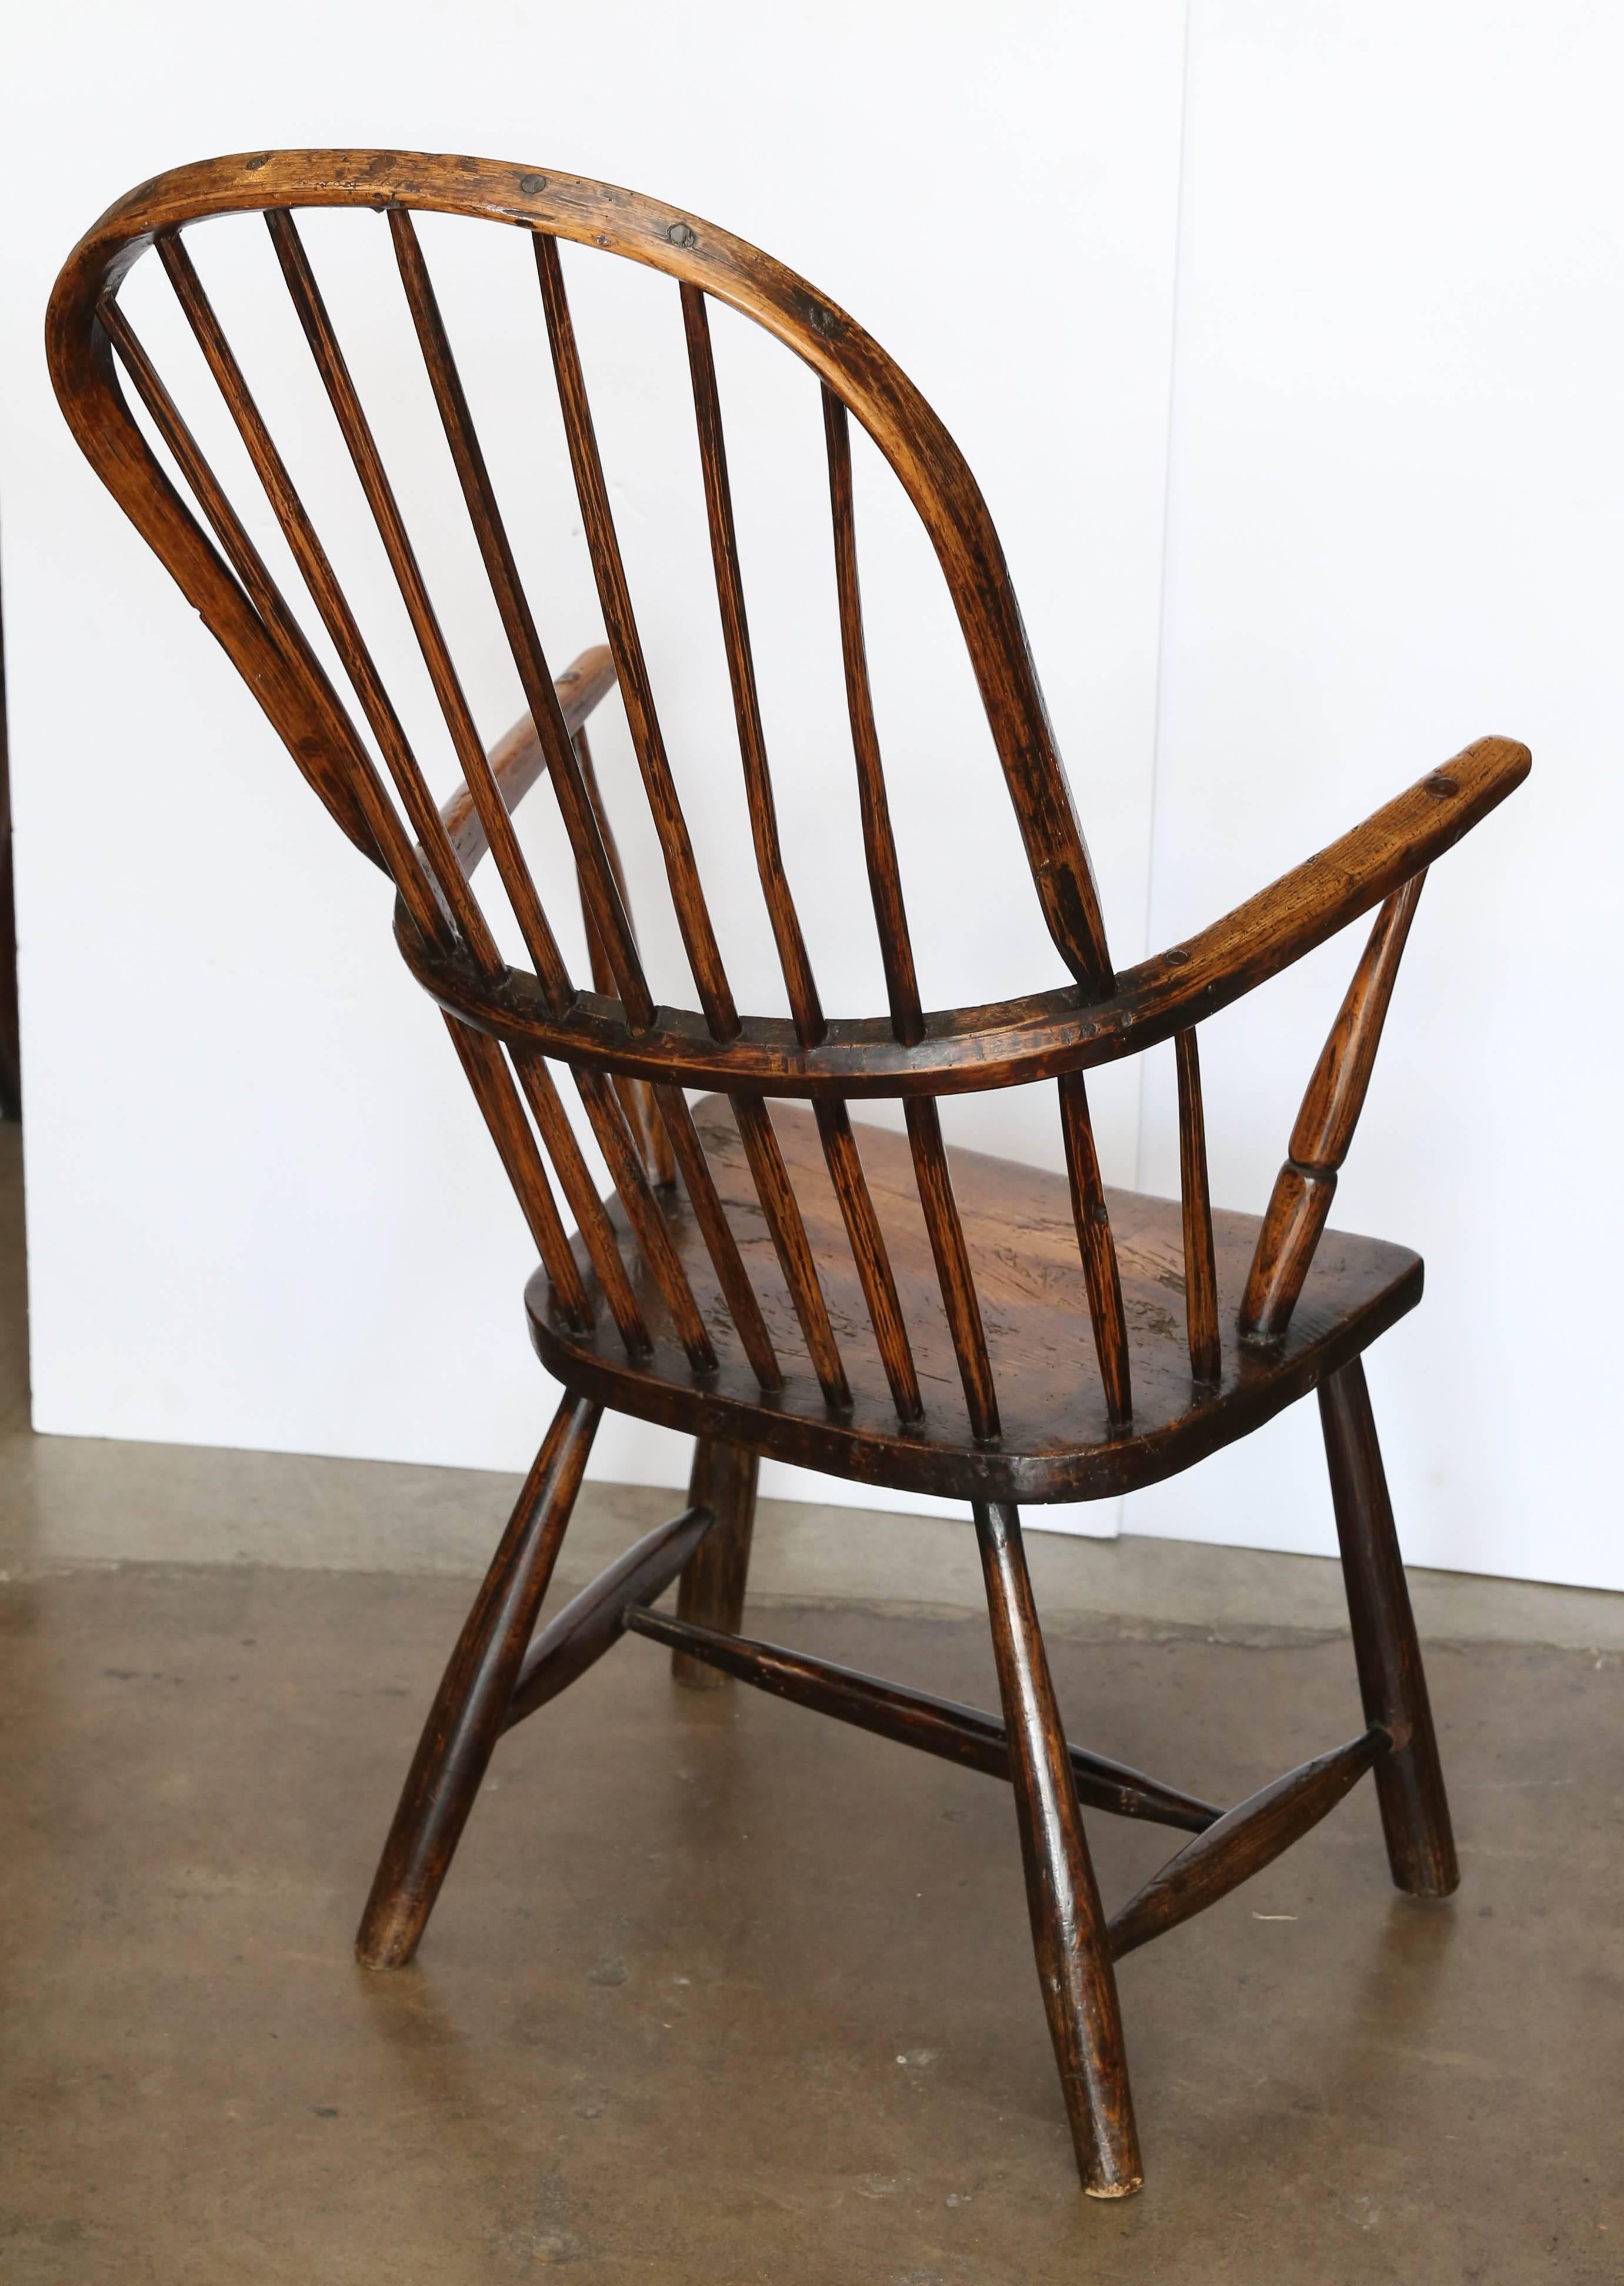 English Early 19th Century Windsor Chair, circa 1800